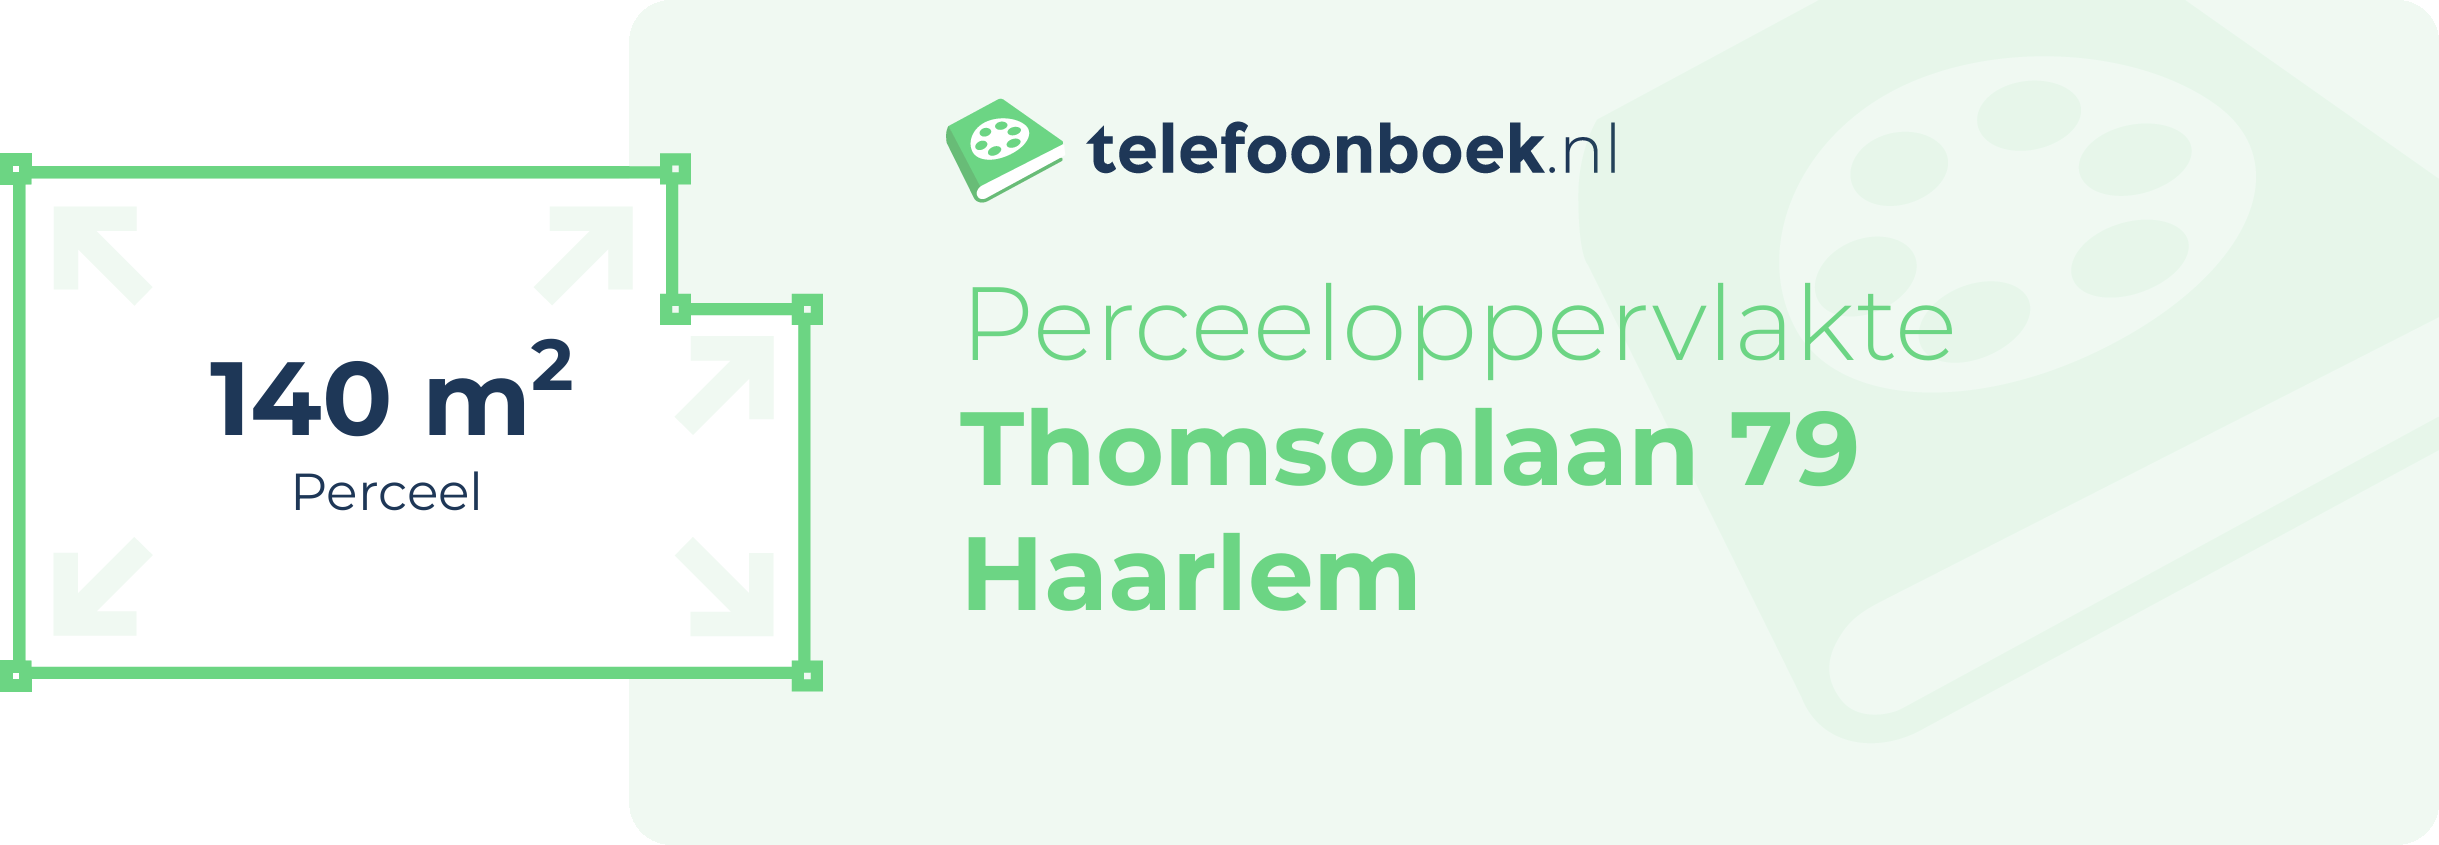 Perceeloppervlakte Thomsonlaan 79 Haarlem